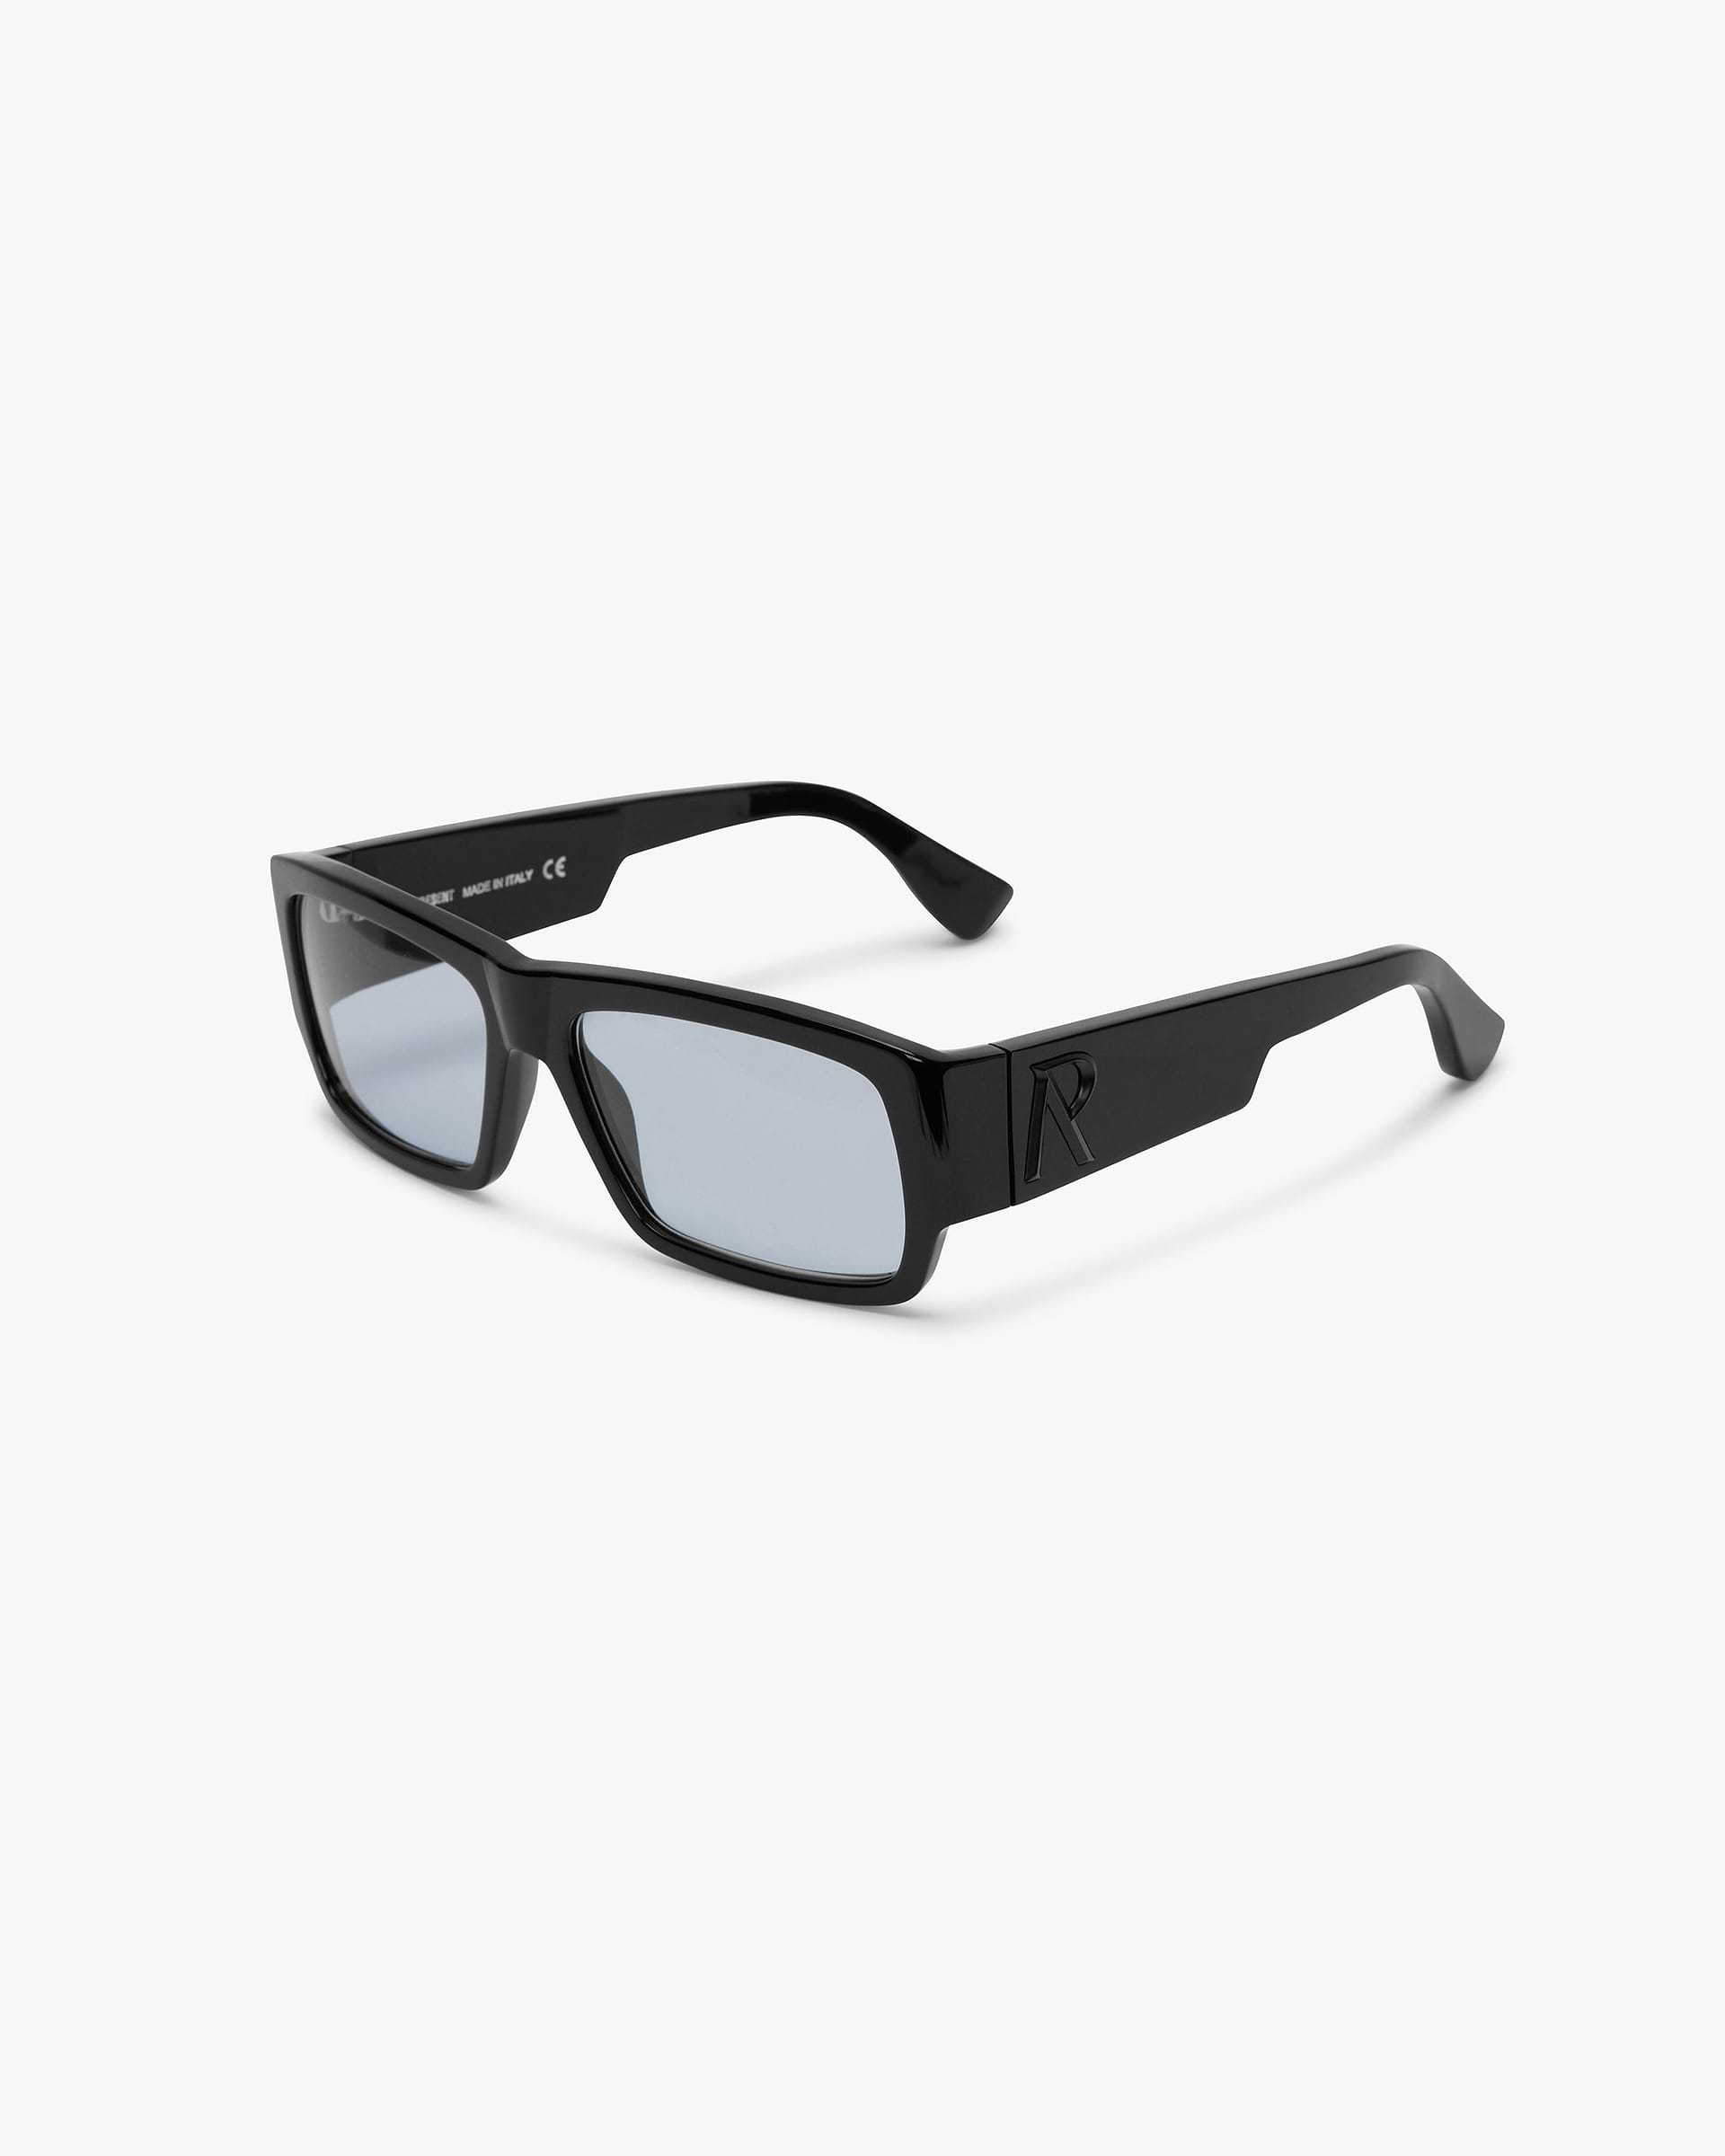 Initial Sunglasses | Black Blue Accessories SC22 | Represent Clo